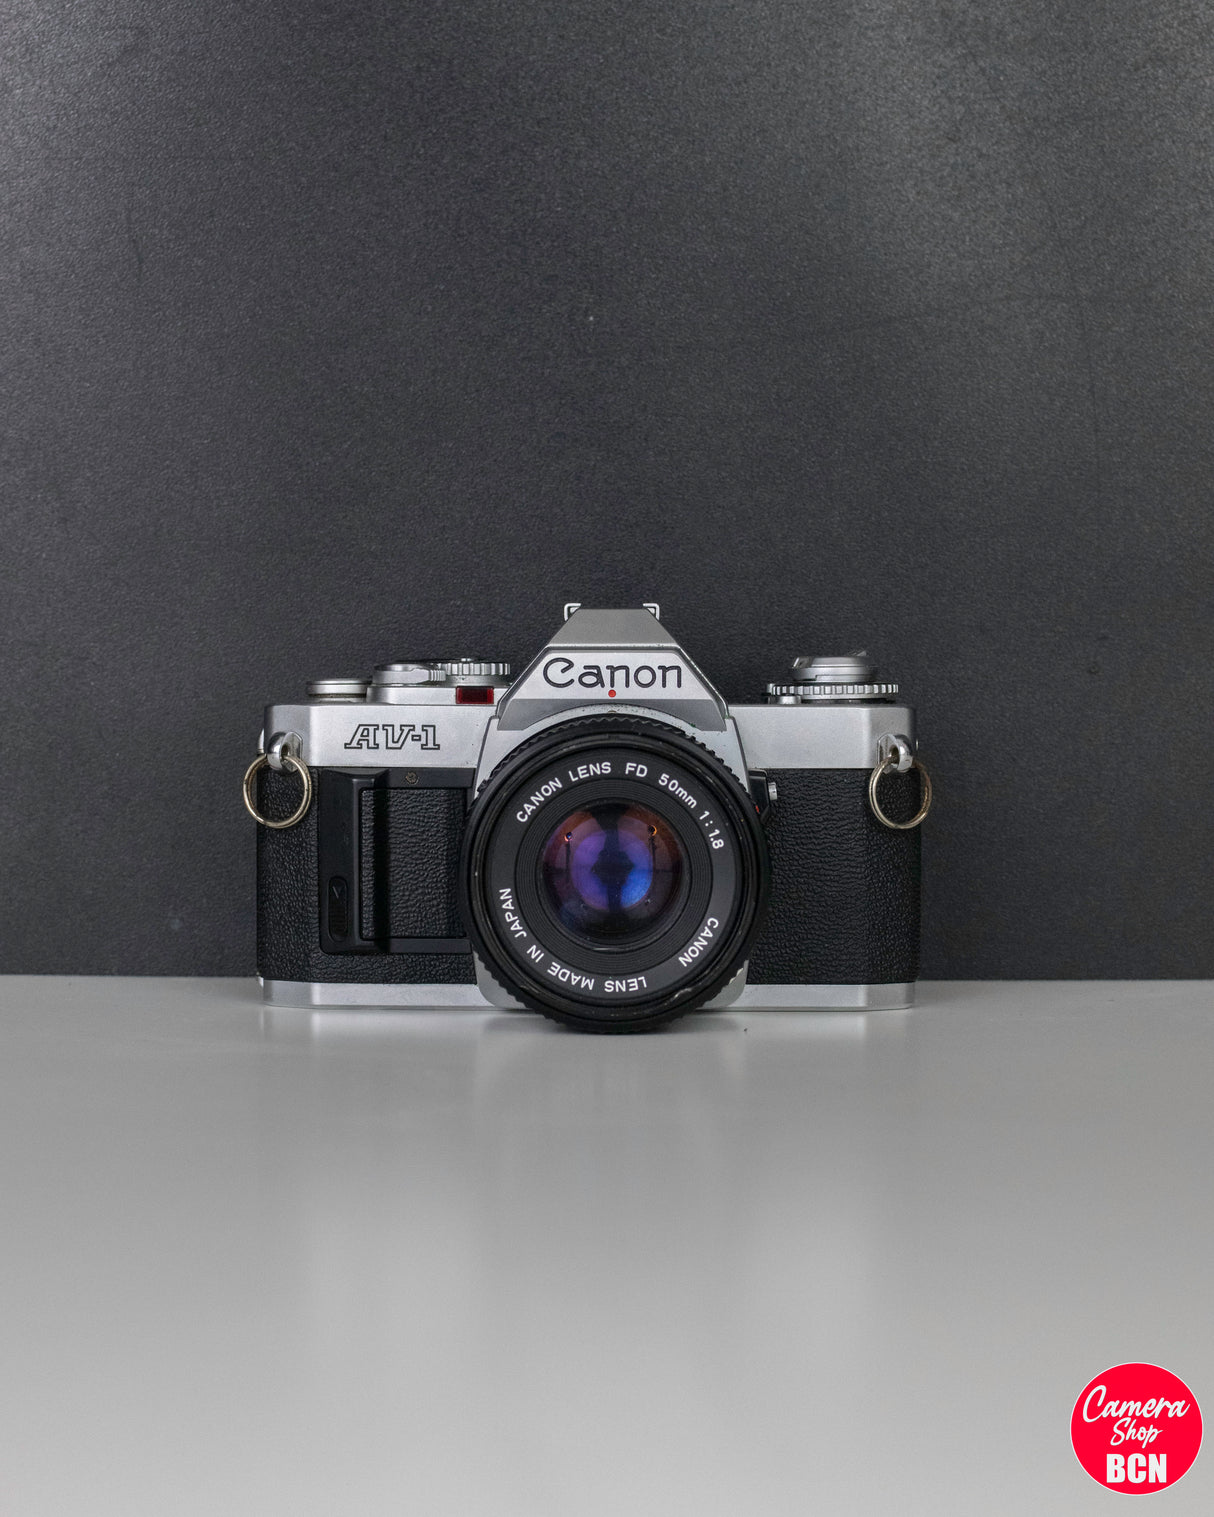 Canon AV-1 - 35mm SLR Film Camera + 50mm FD 1.8 LENS